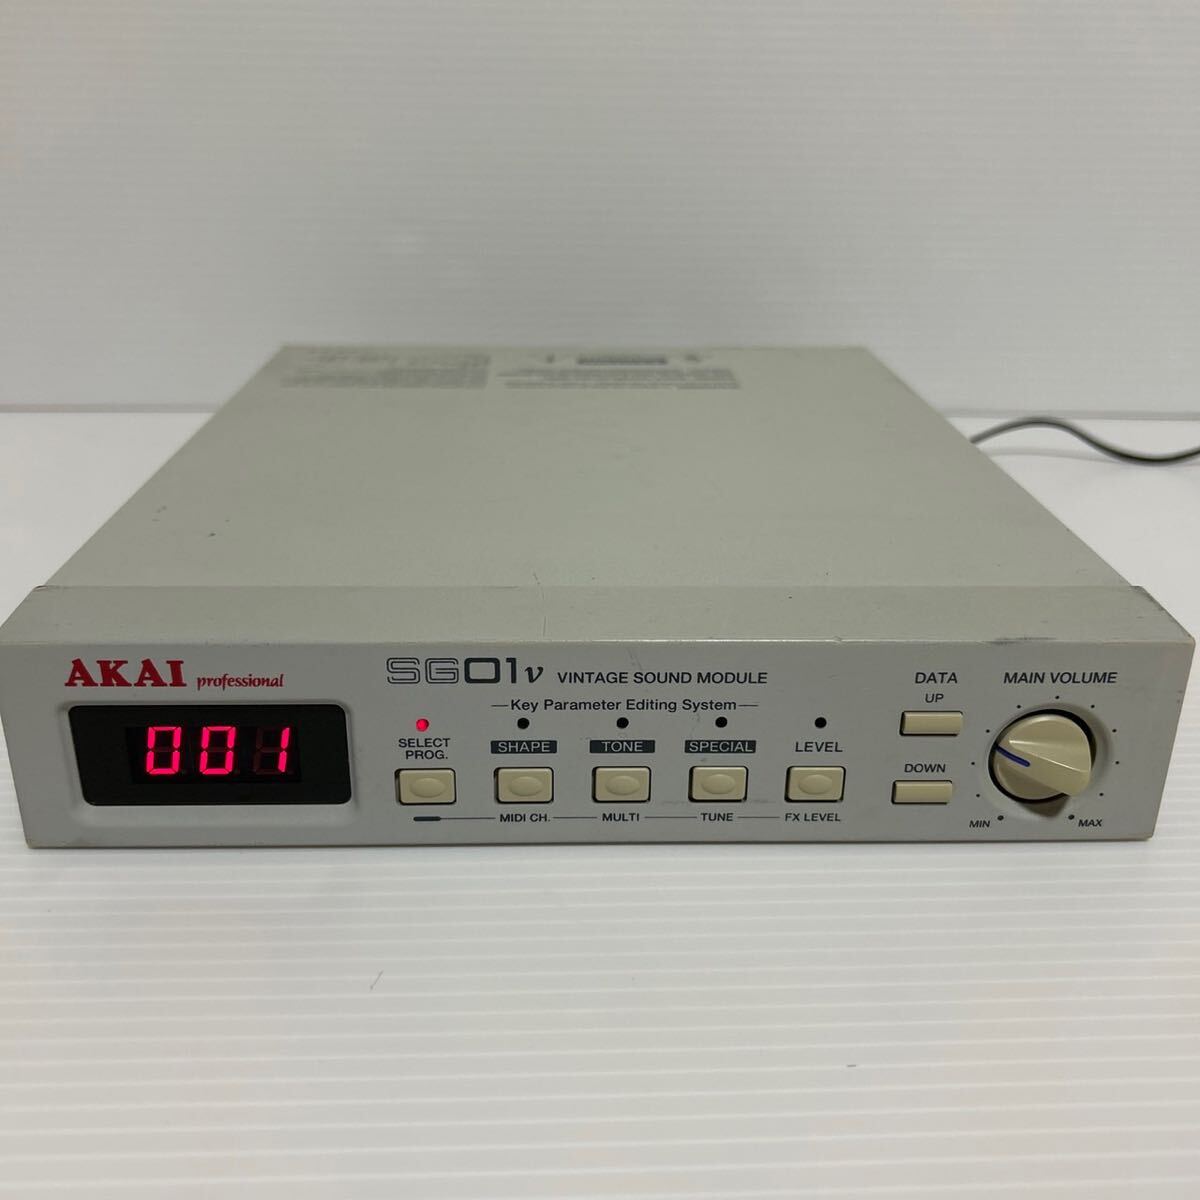 AKAI professional SG01v VINTAGE SOUND аудио-модуль 